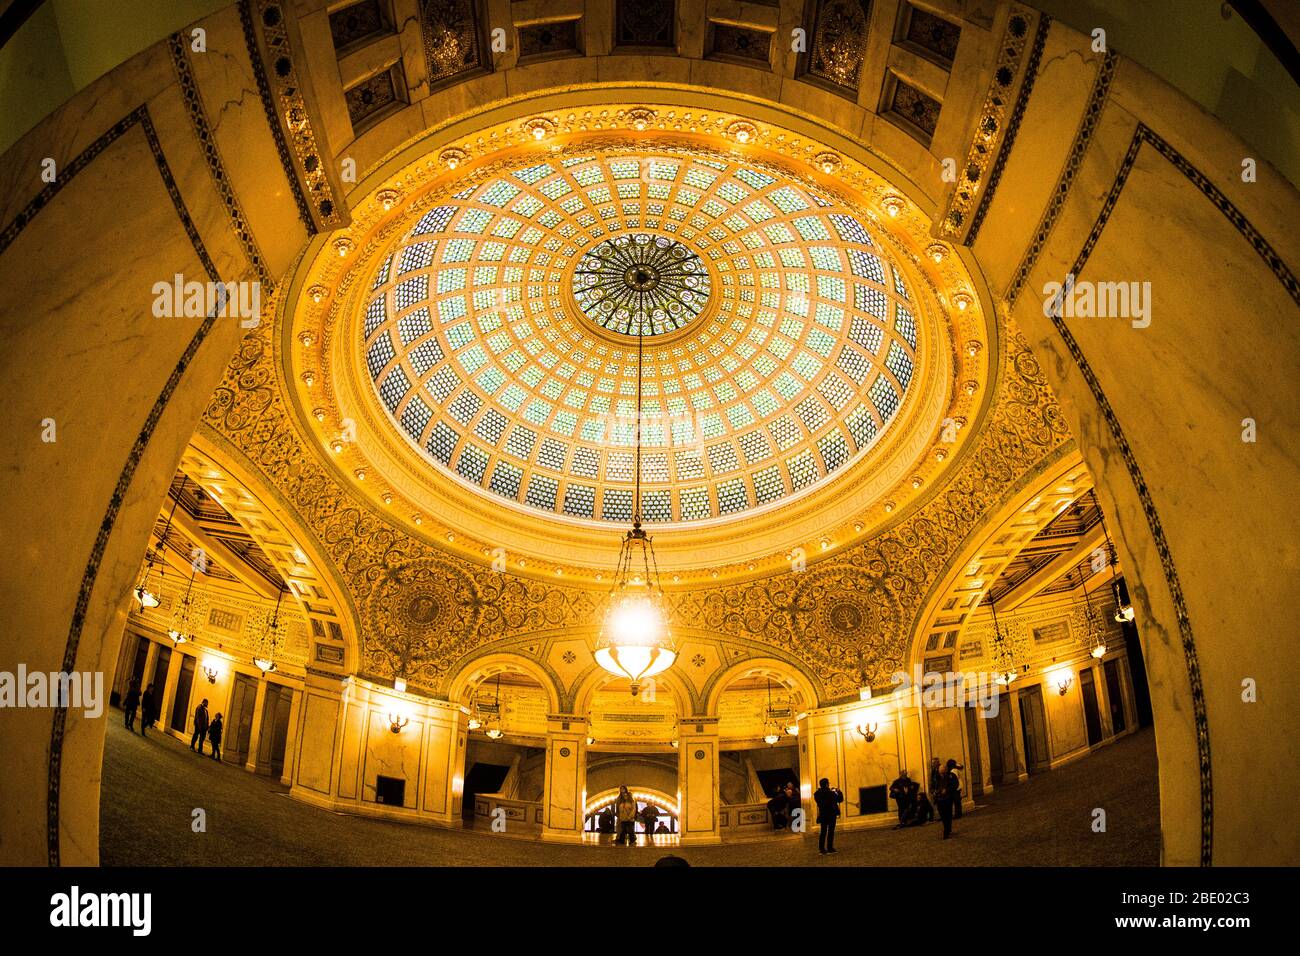 Illuminated interior of building, Chicago, Illinois, USA Stock Photo